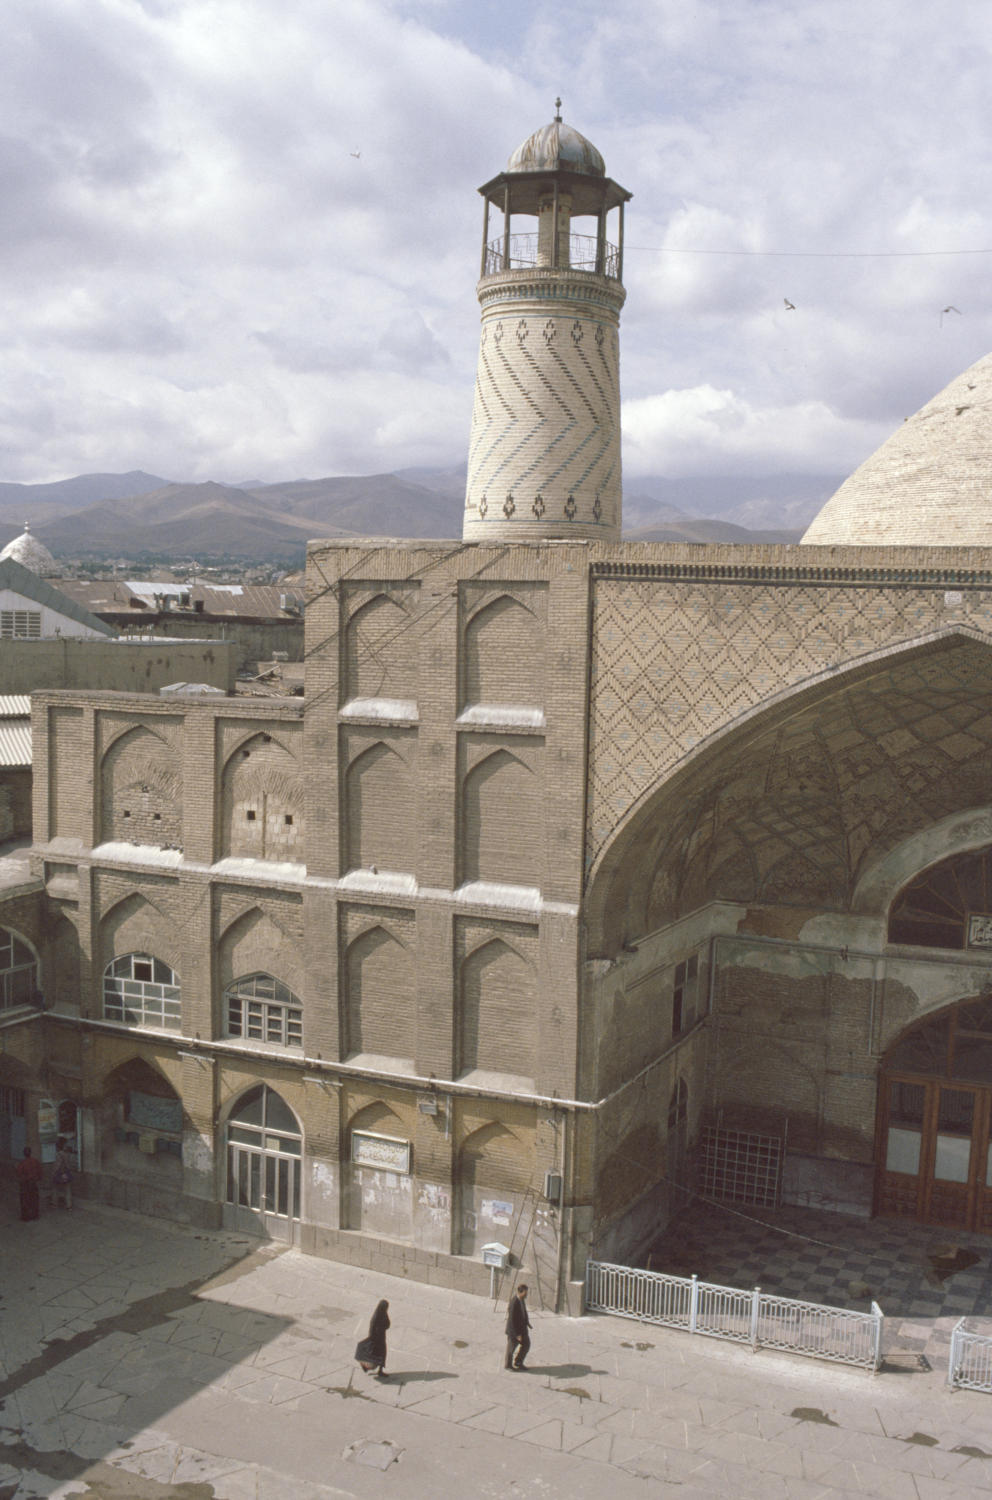 View toward qibla iwan, showing one of the minarets.